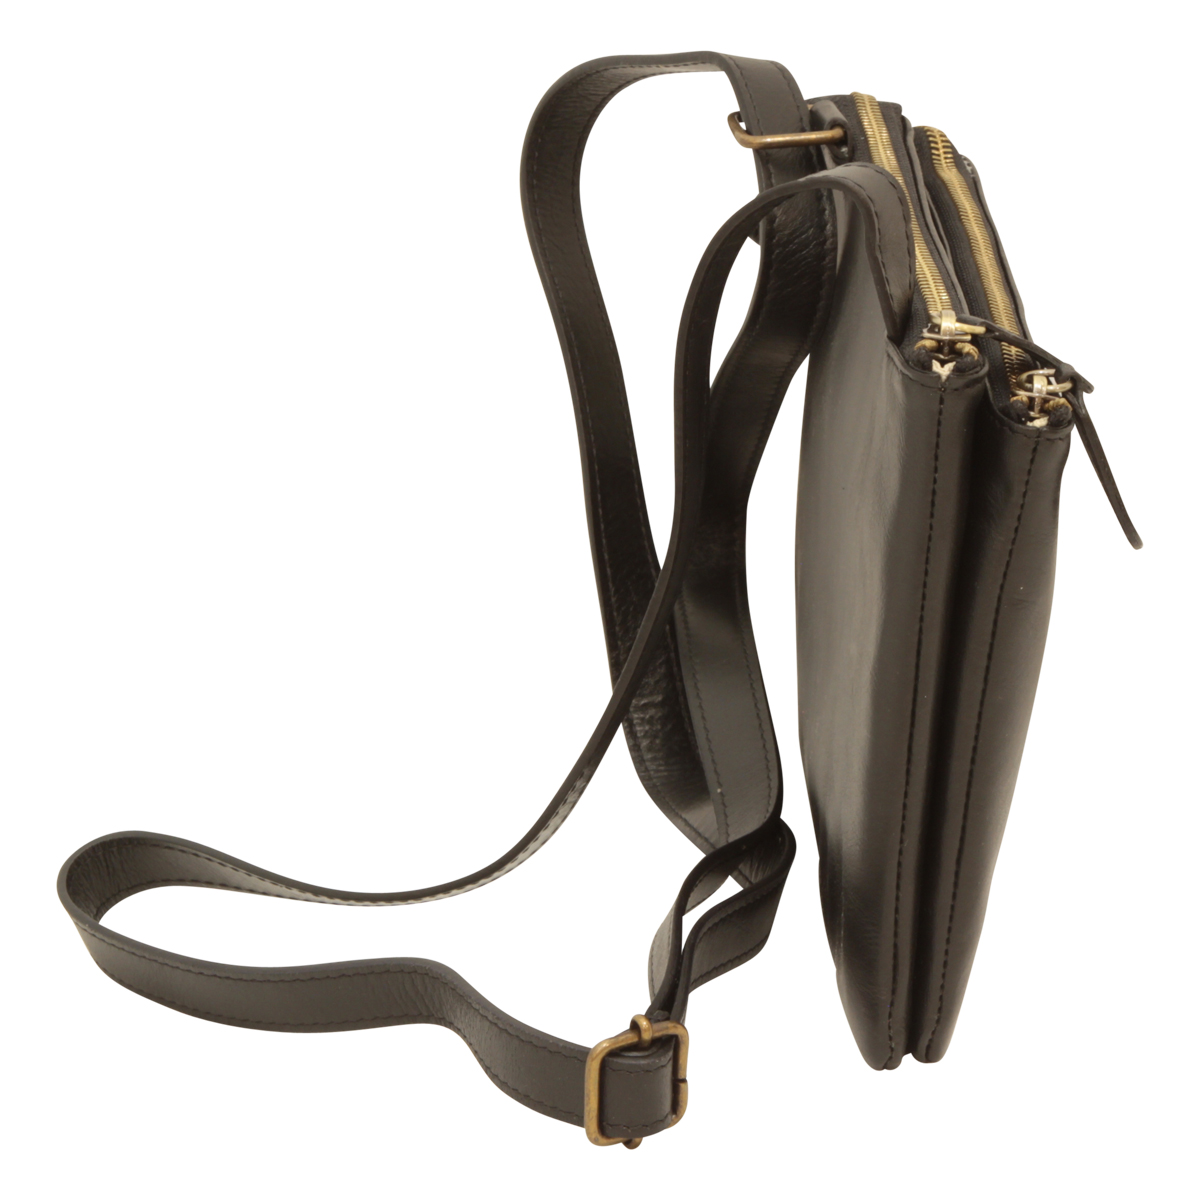 Full-grain calfskin leather shoulder bag - Black | 413489NE US | Old Angler Firenze